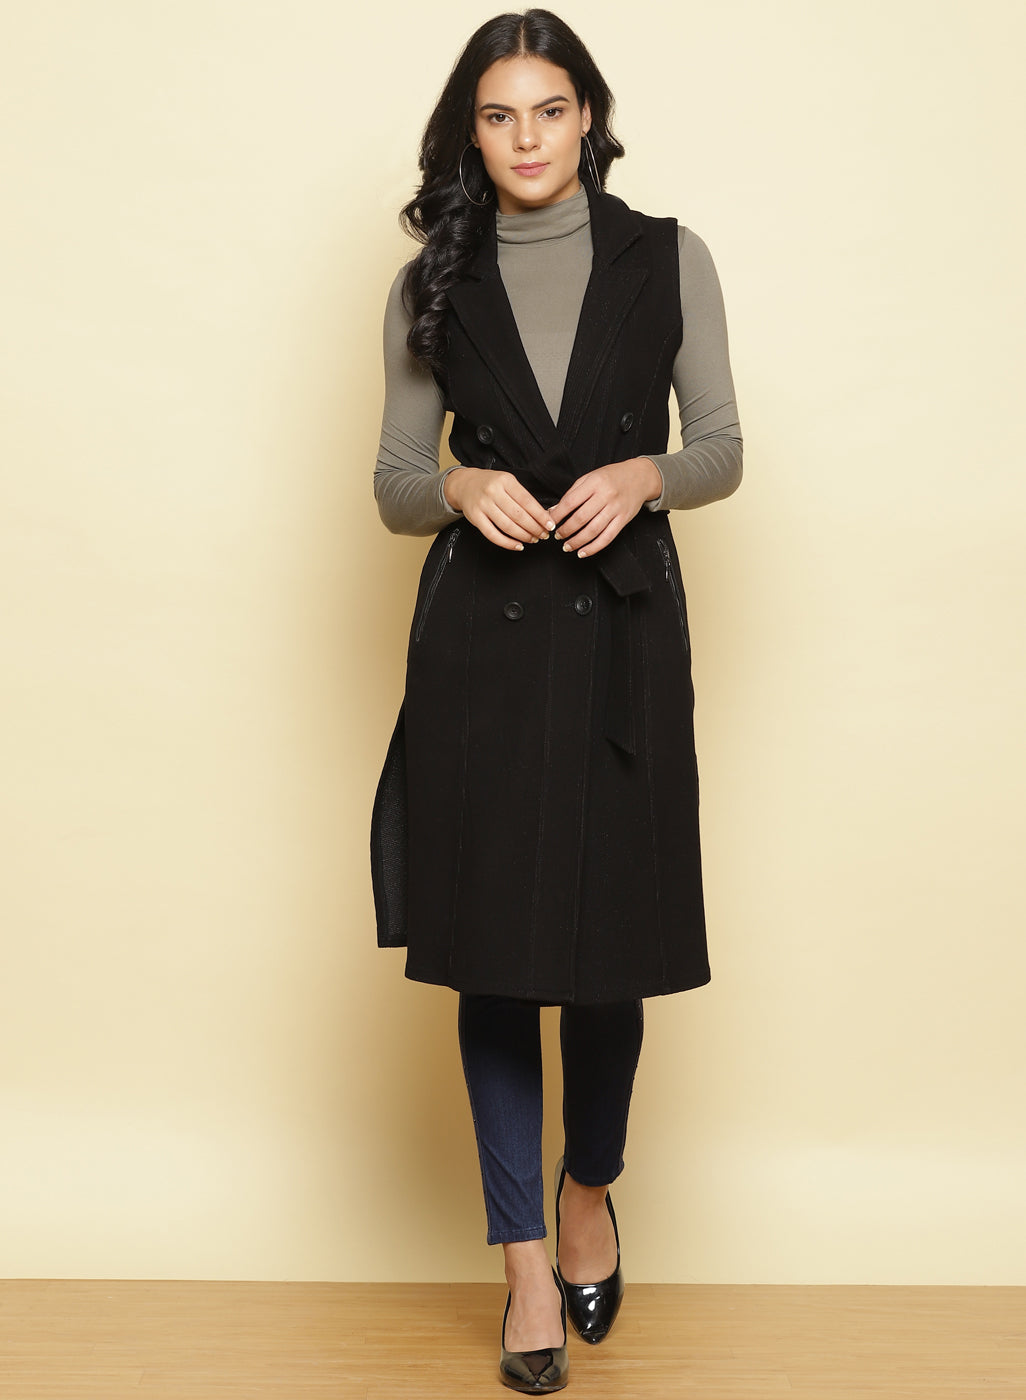 Charcoal Black Sleeveless Trench coat